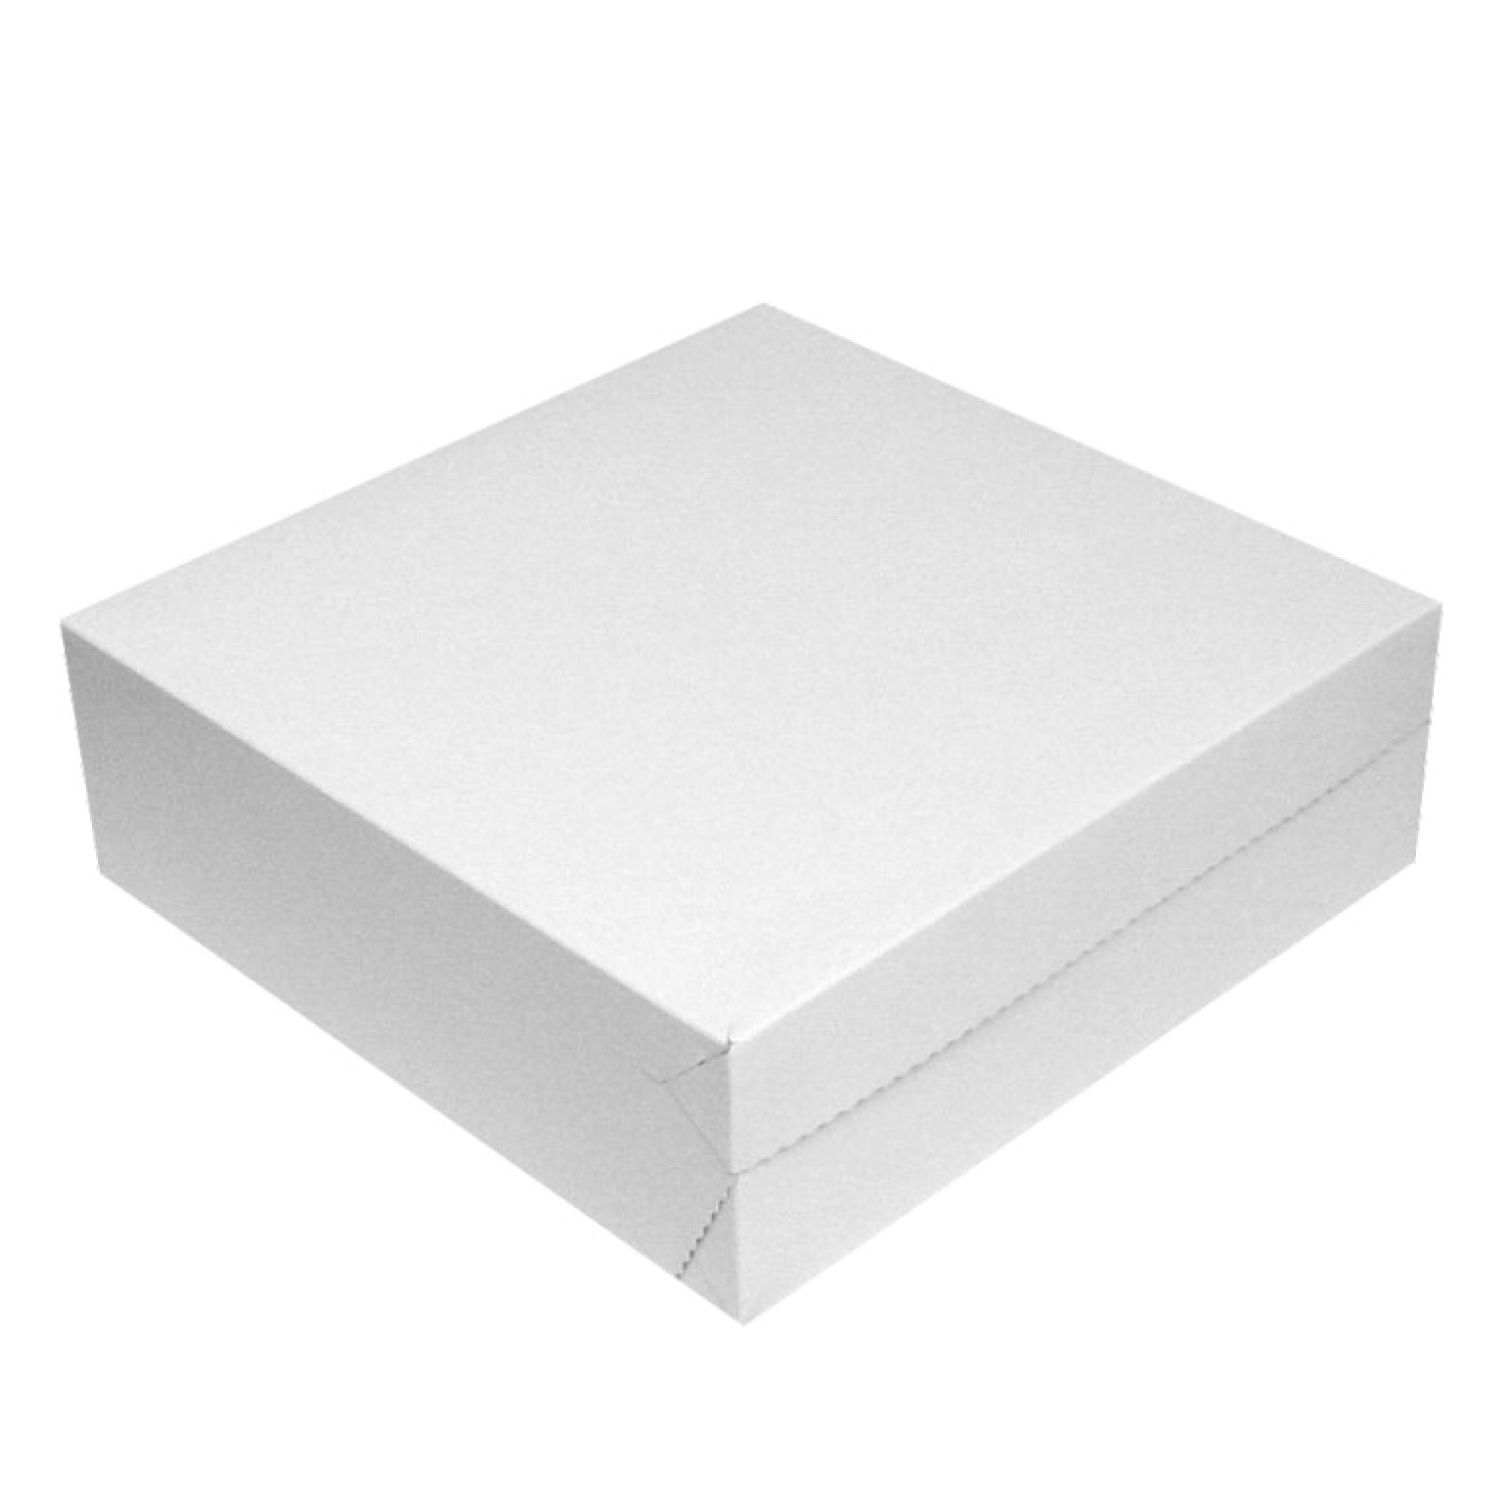 Tortová krabica 30 x 30 x 10 cm [50 ks]